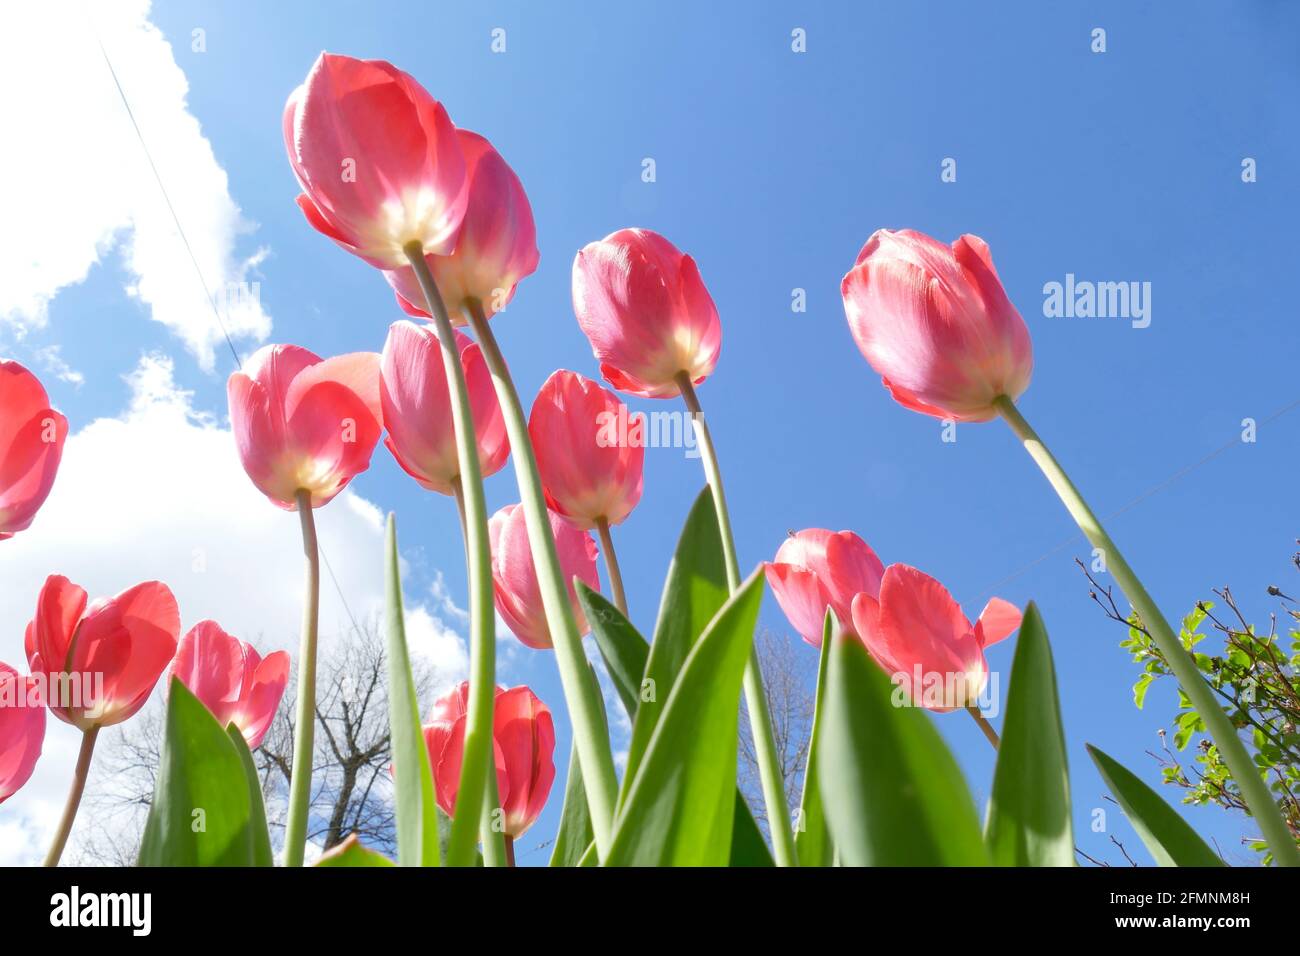 Rosa blühendeTulpen (Tulipa), Froschpwerspektive,Blauer Himmel, Closeup, Deutschland, Europa Stock Photo